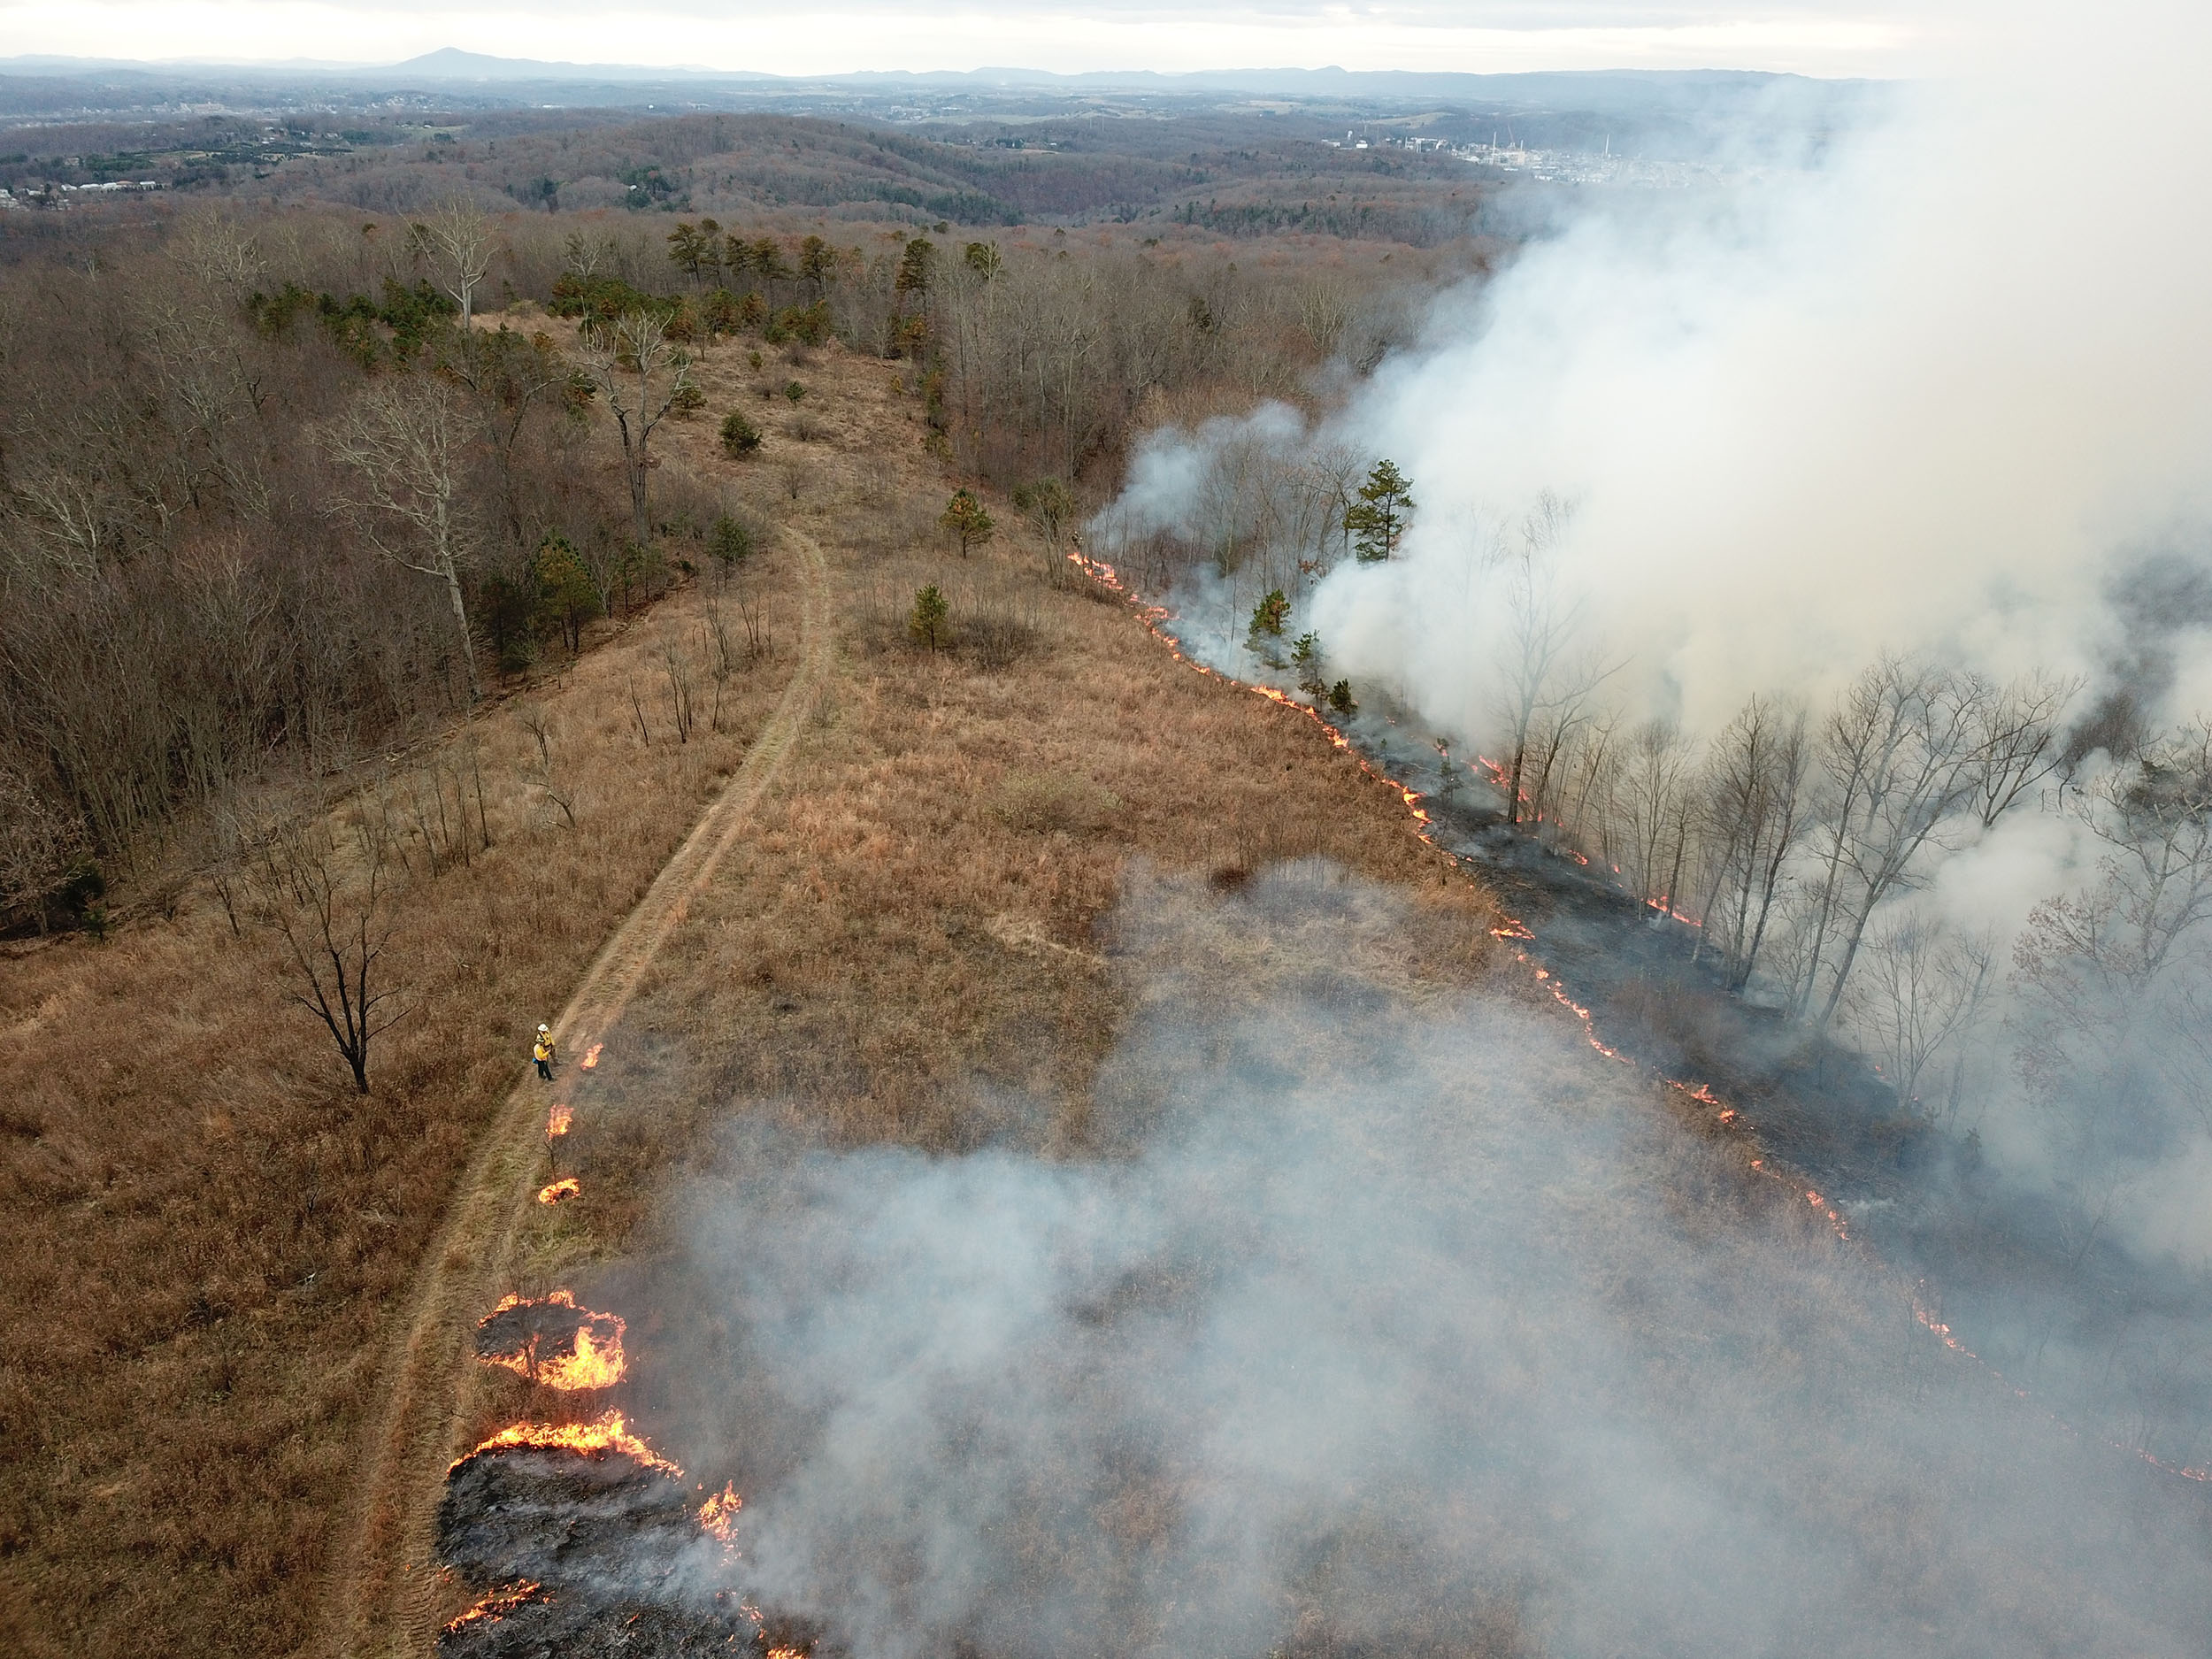 UAV view of the burn